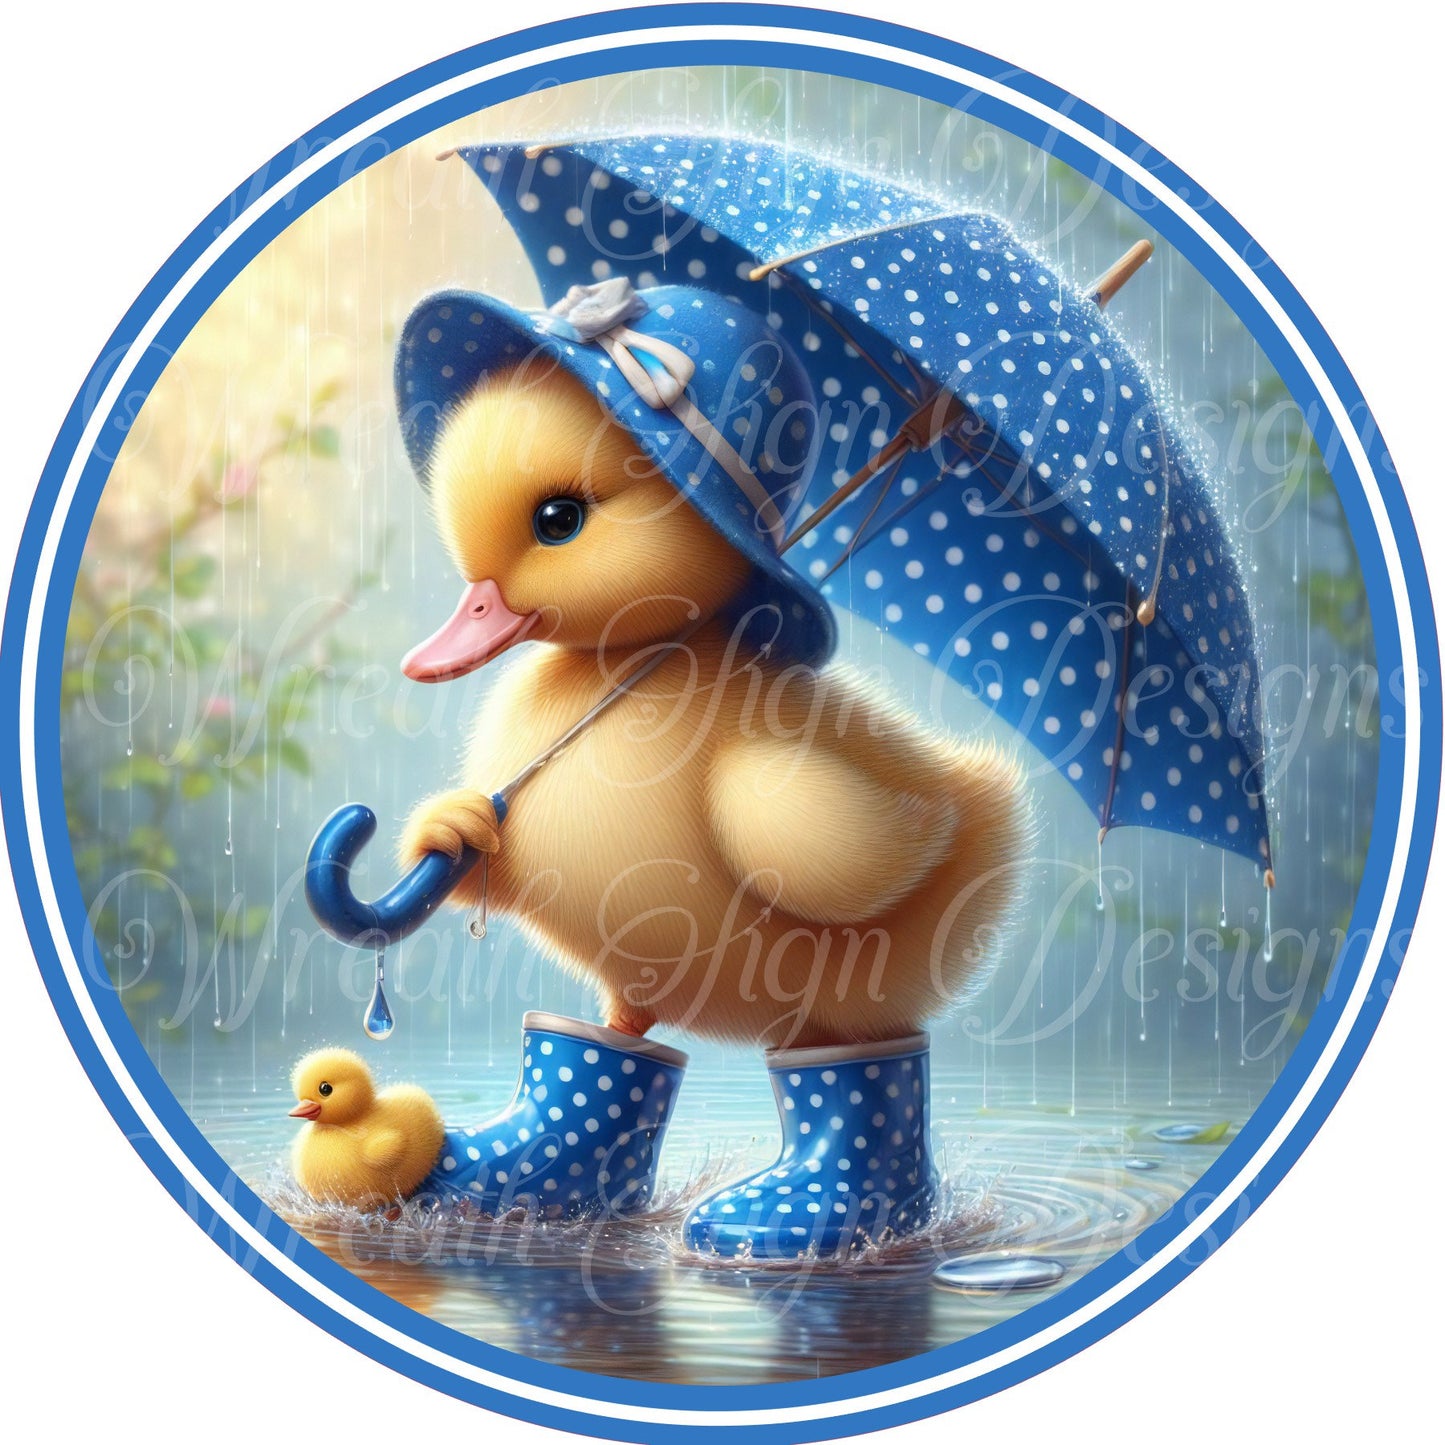 April Showers Duck in the rain,  blue Umbrella, Spring metal sign  Round sign, Wreath attachment, Wreath center,